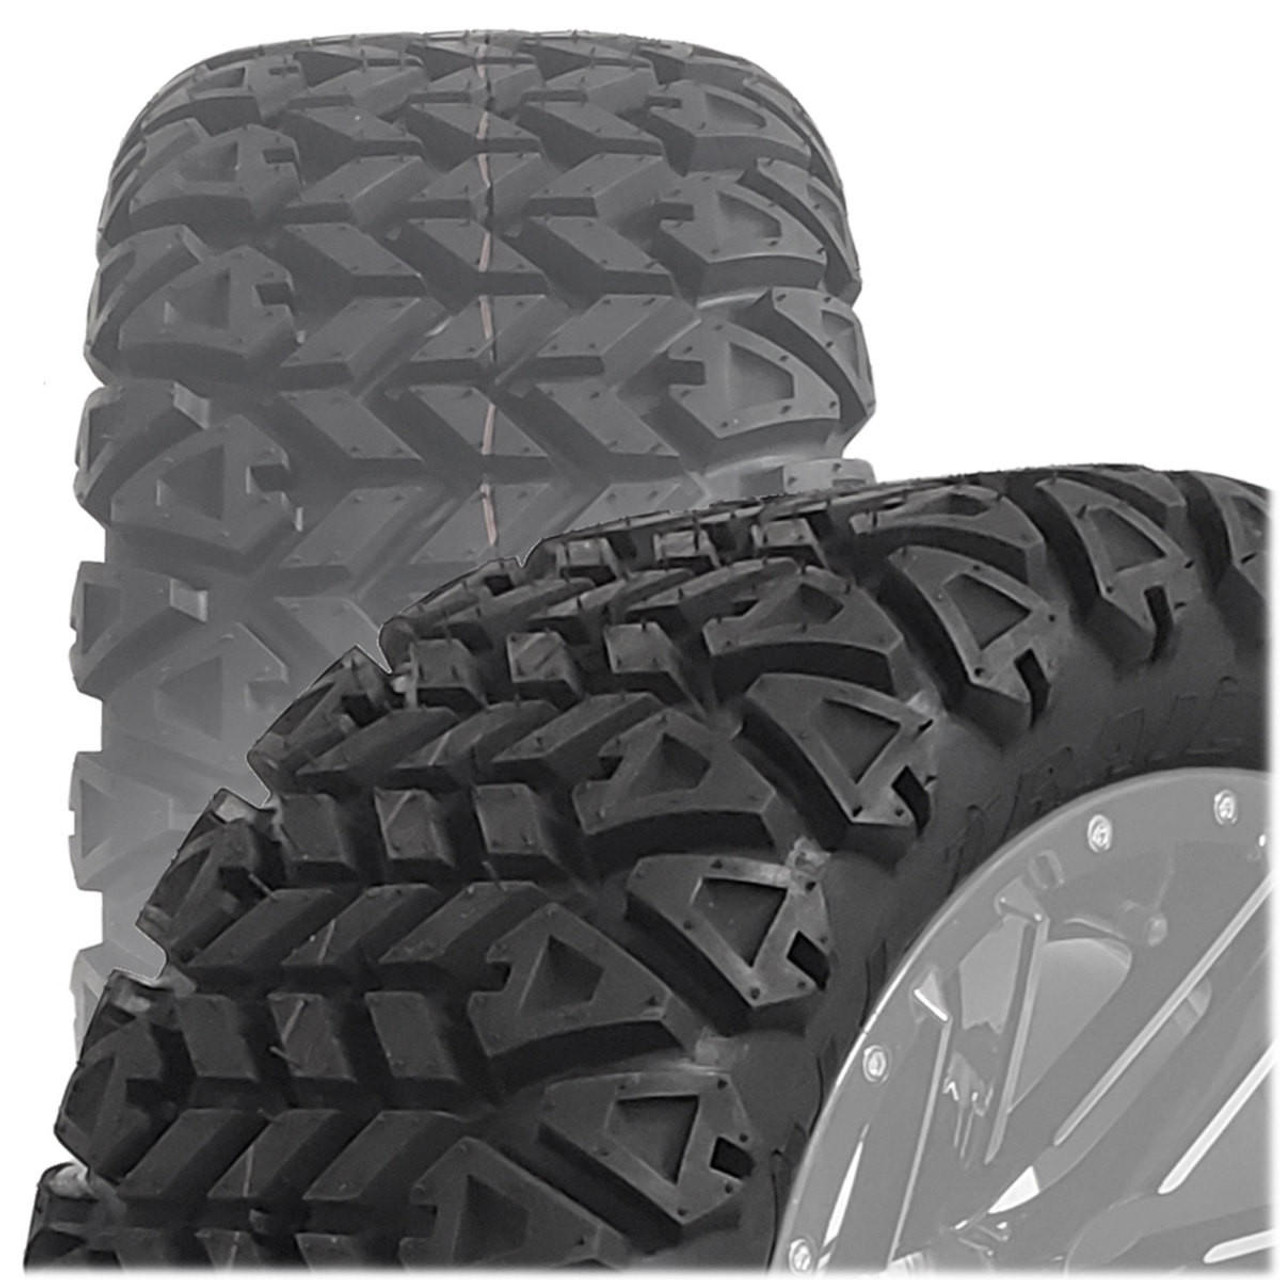 ProFormX 12" PHANTOM Gloss Black Wheels on 23x10.5x12 Predator Off-Road Tires 